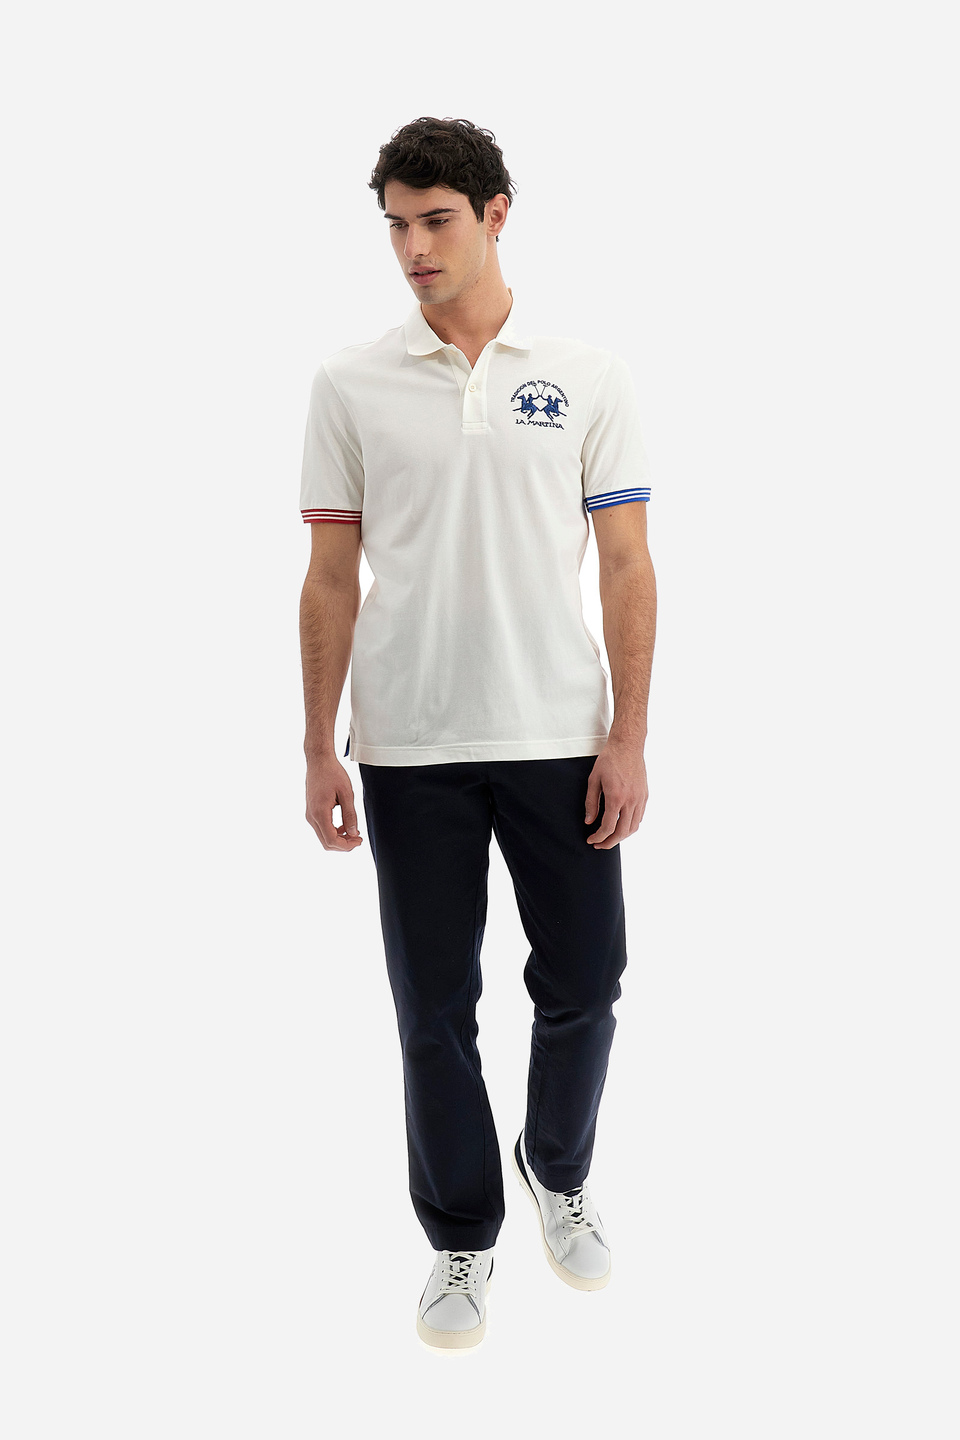 Herren-Poloshirt Regular Fit - Waddell | La Martina - Official Online Shop